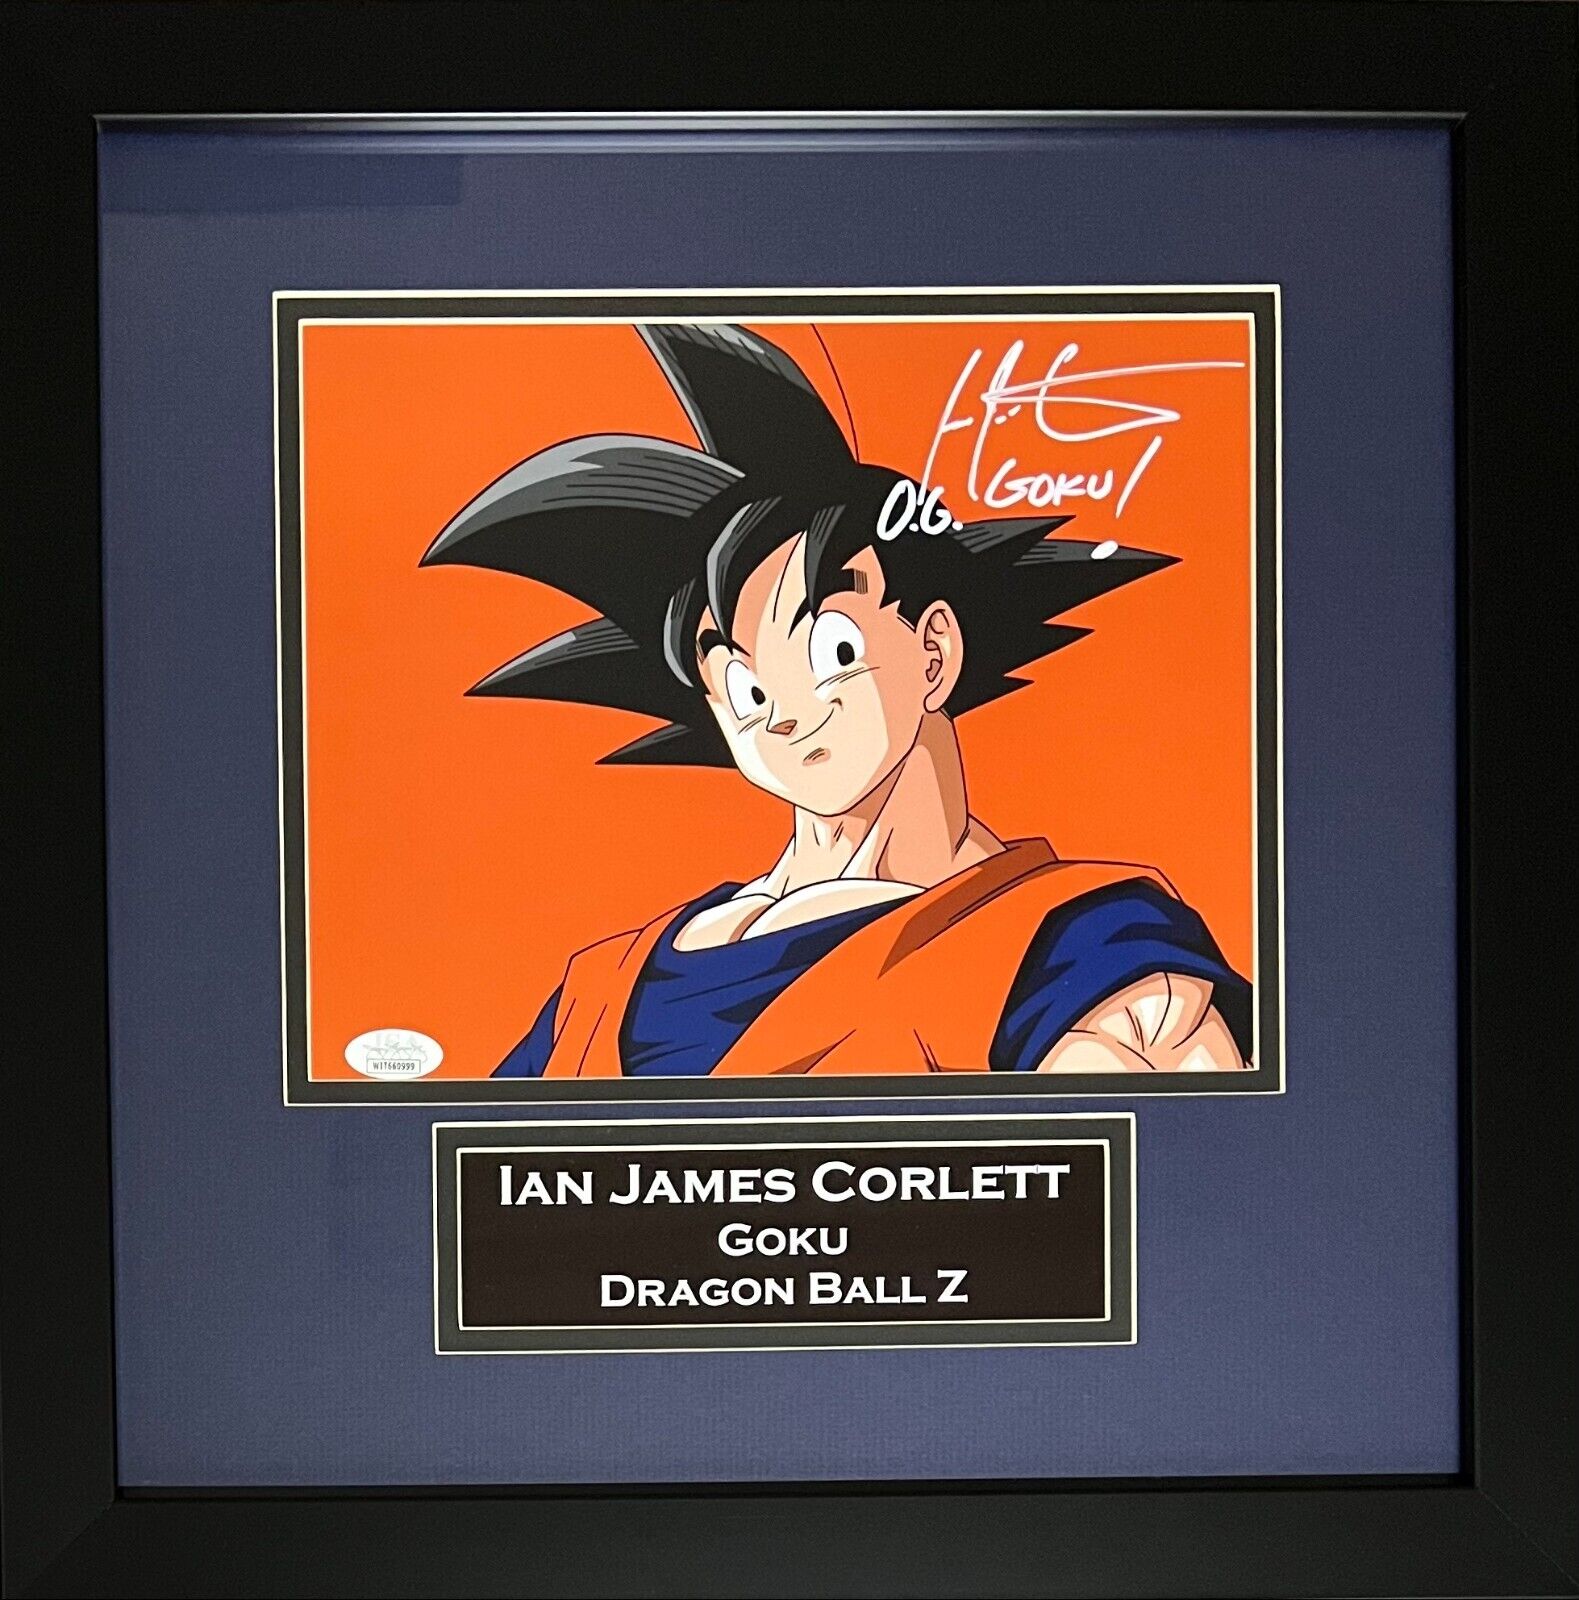 Ian James Corlett Signed Inscribed 8x10 Photo Framed Goku Jsa Coa Dragon Ball Z